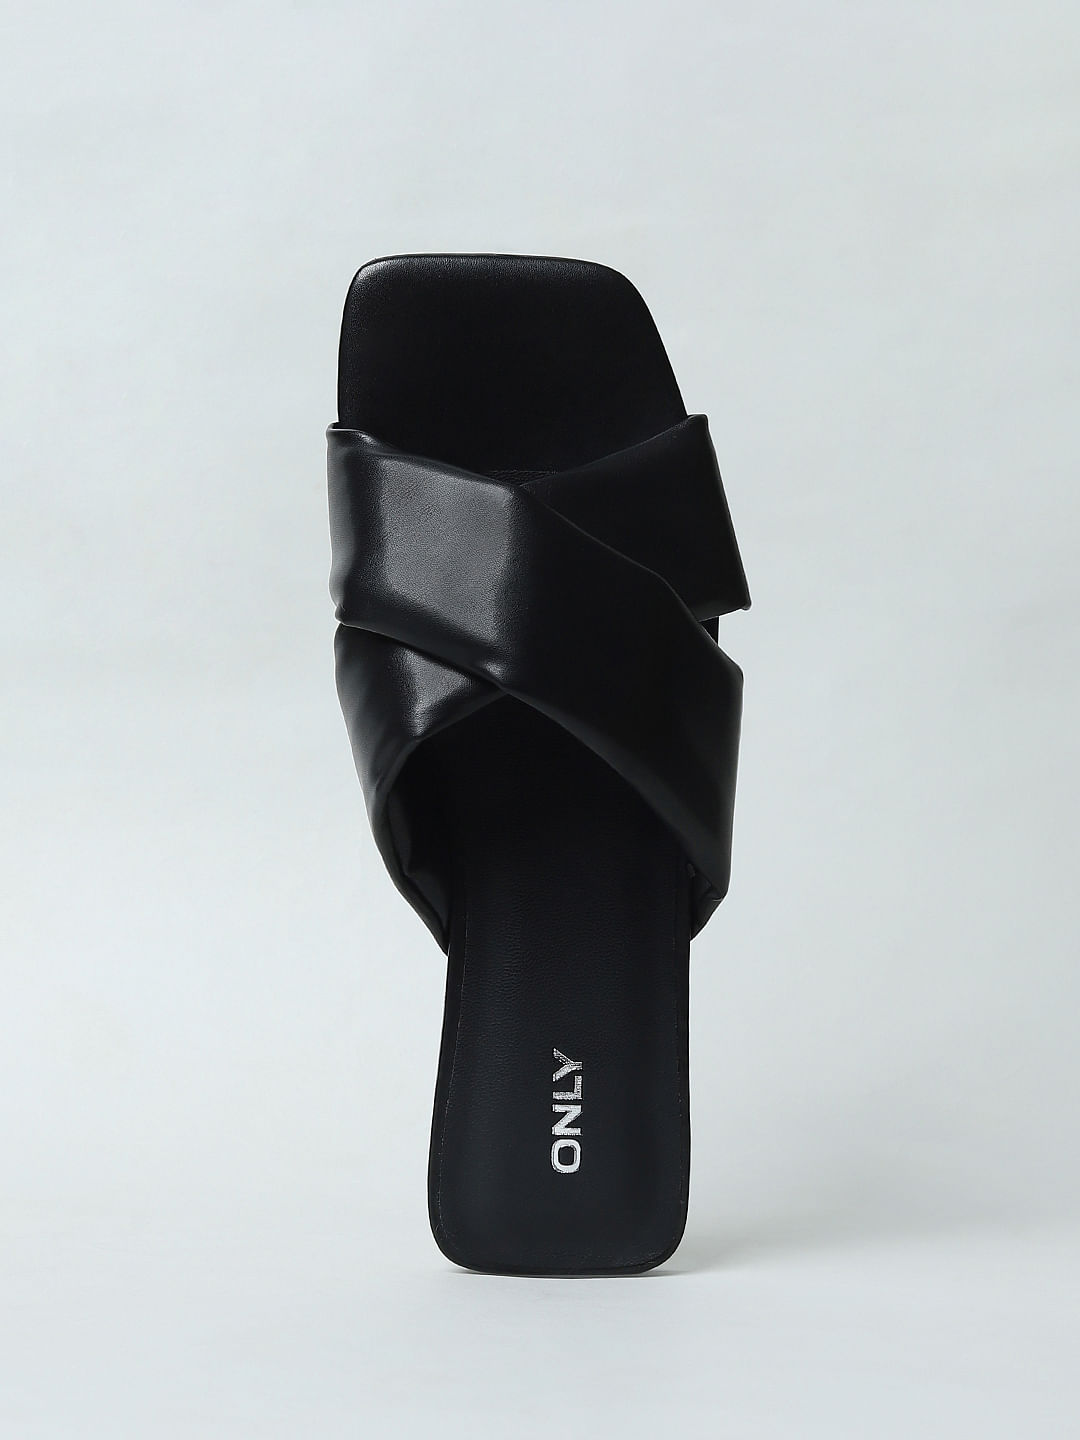 Puma mens Zeal China Blue-Peacoat-Silver Sandal - 6 UK (38139601) :  Amazon.in: Fashion